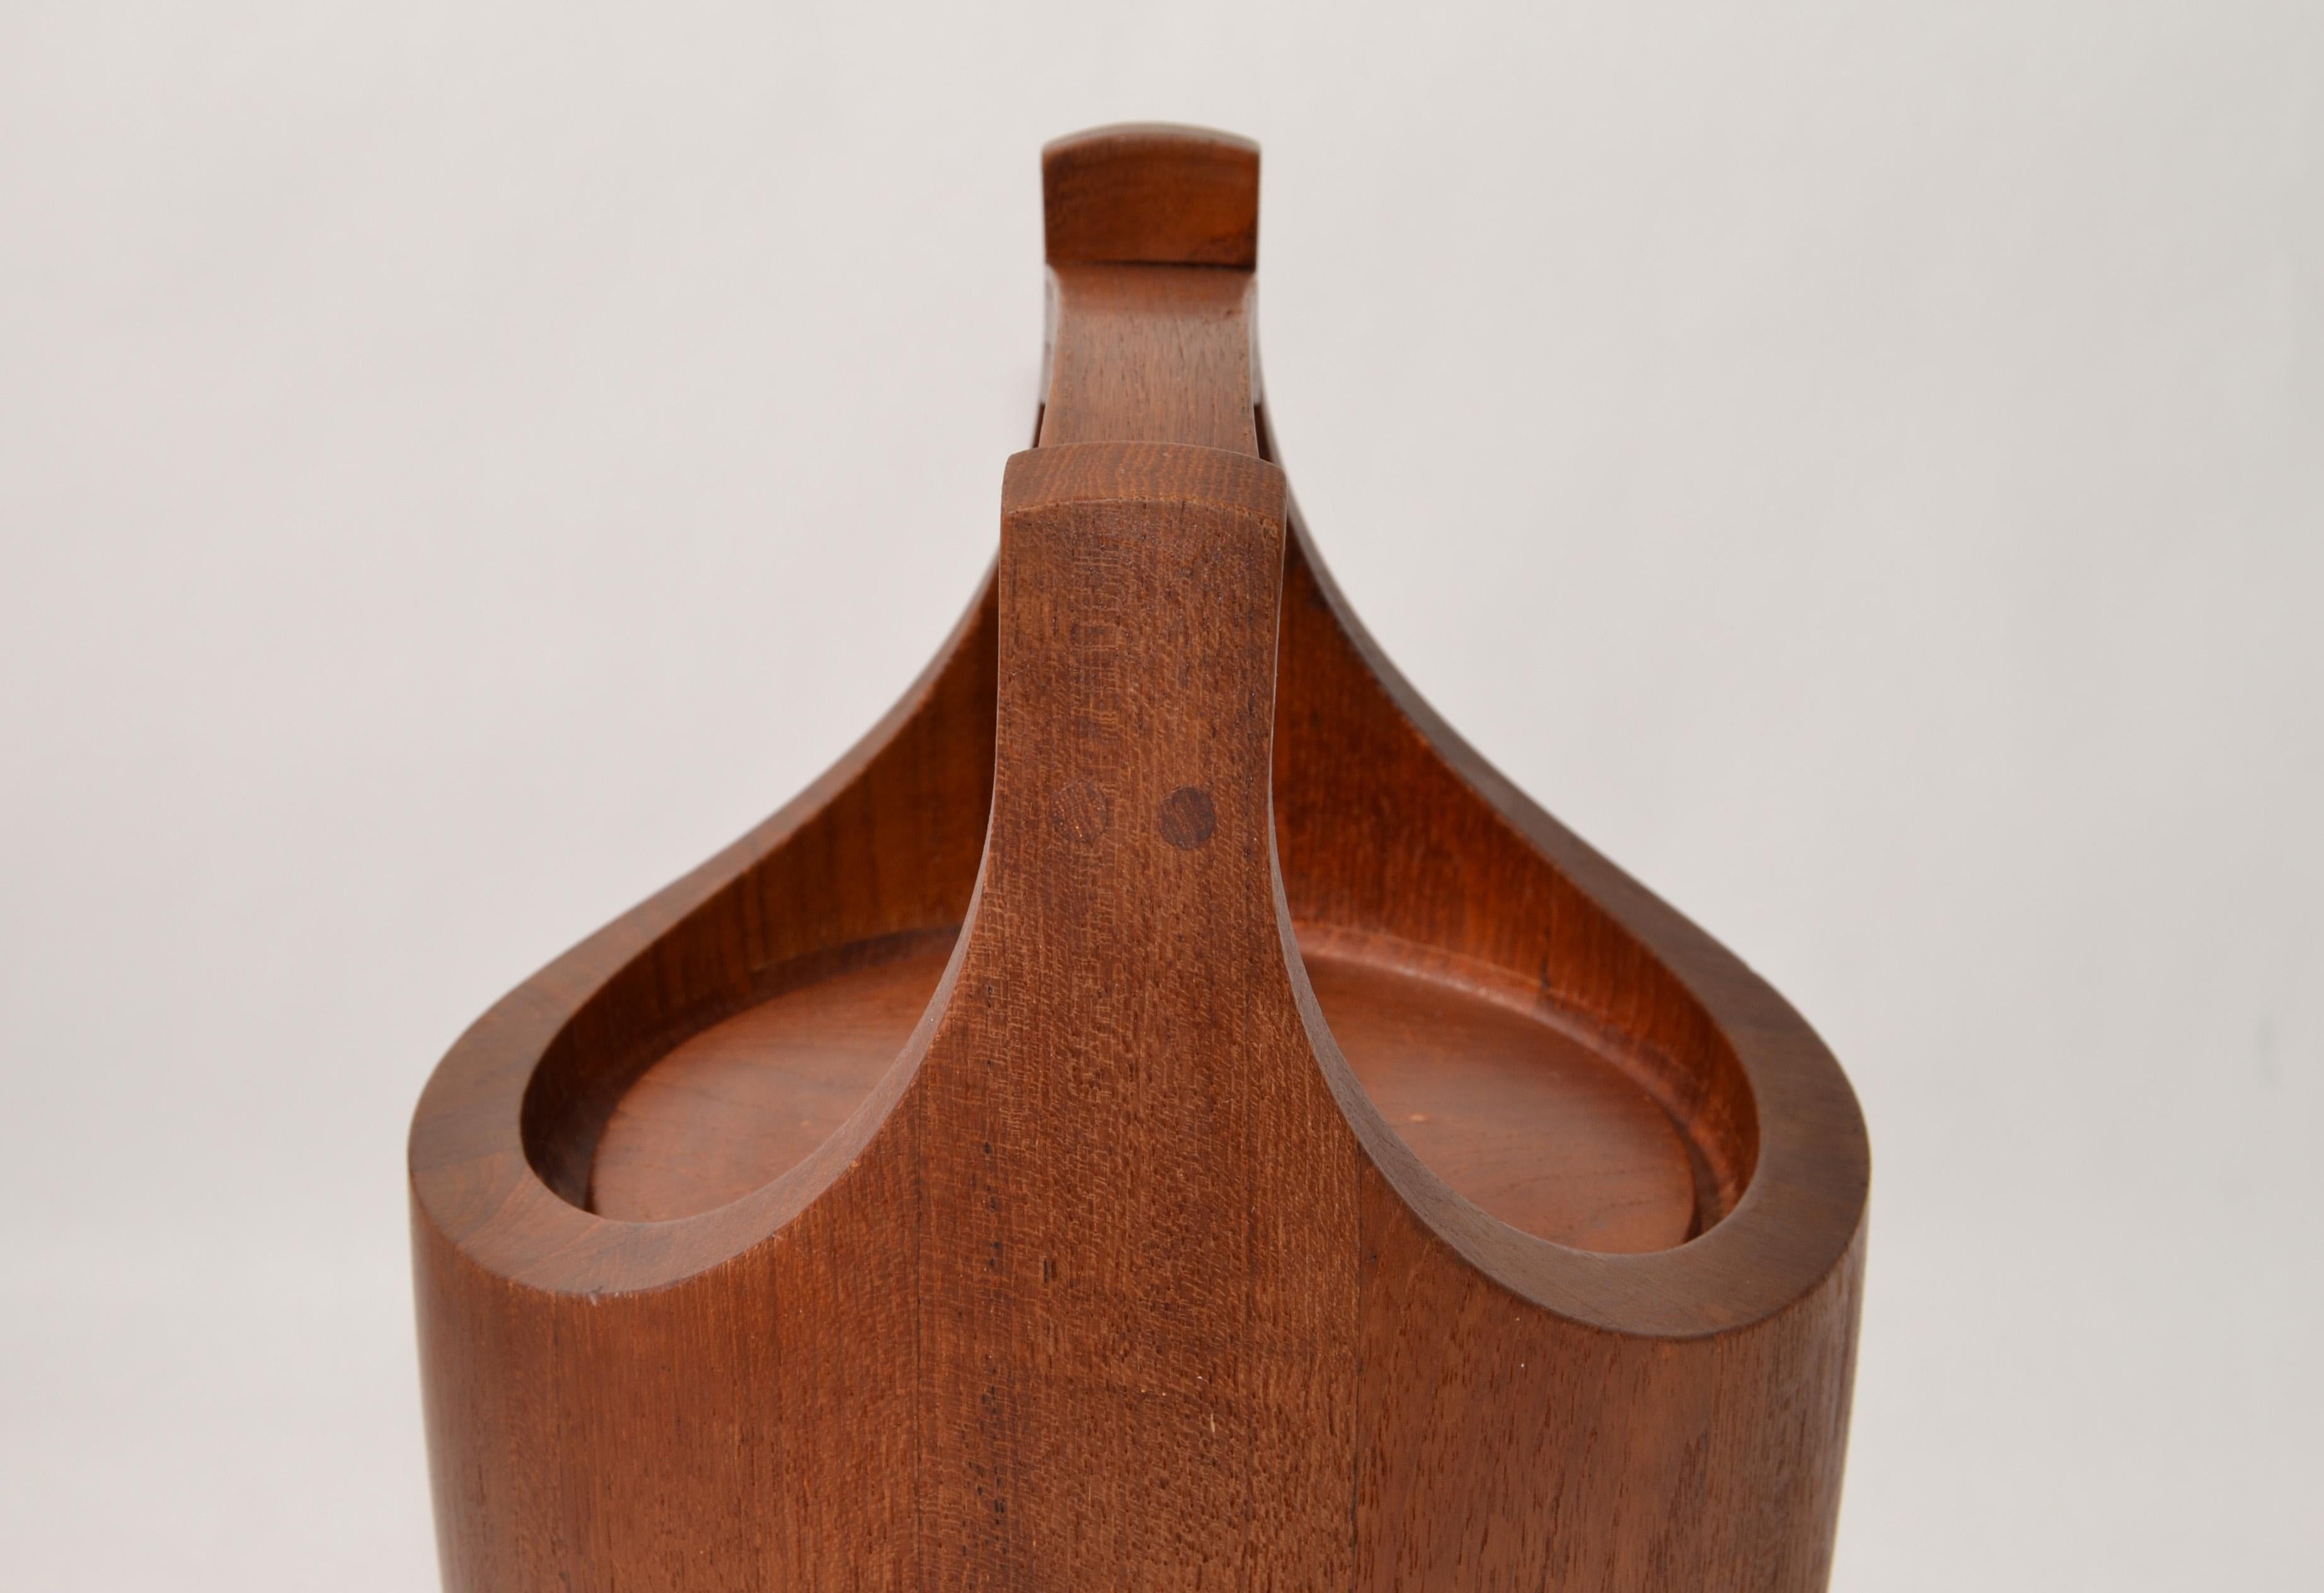 20th Century Jens Quistgaard Dansk Designs Scandinavian Modern Staved Teak Lidded Ice Bucket For Sale